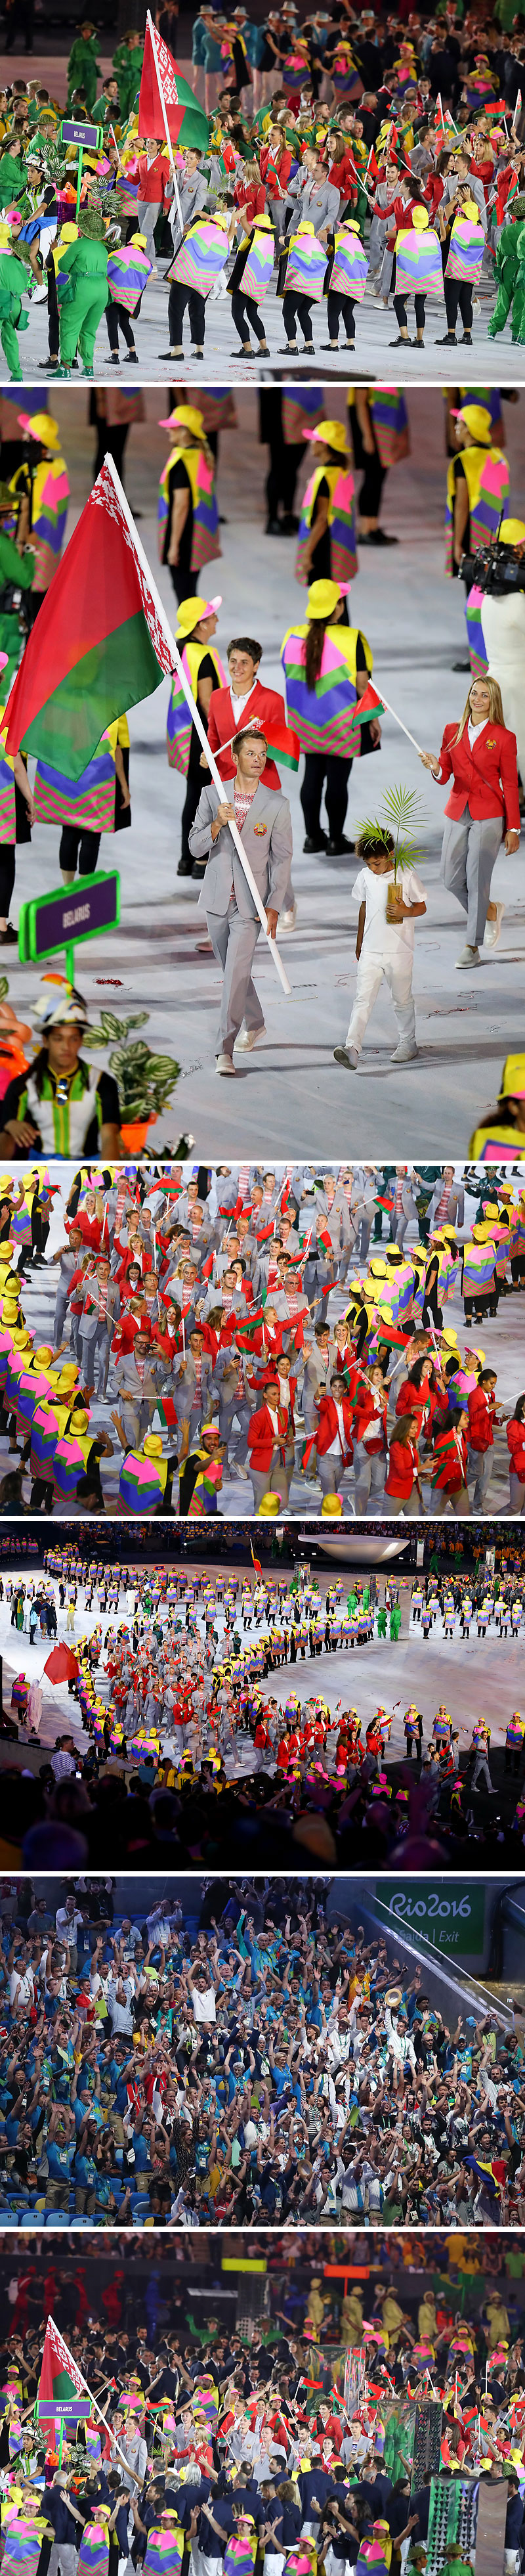 2016 Rio Games opening ceremony